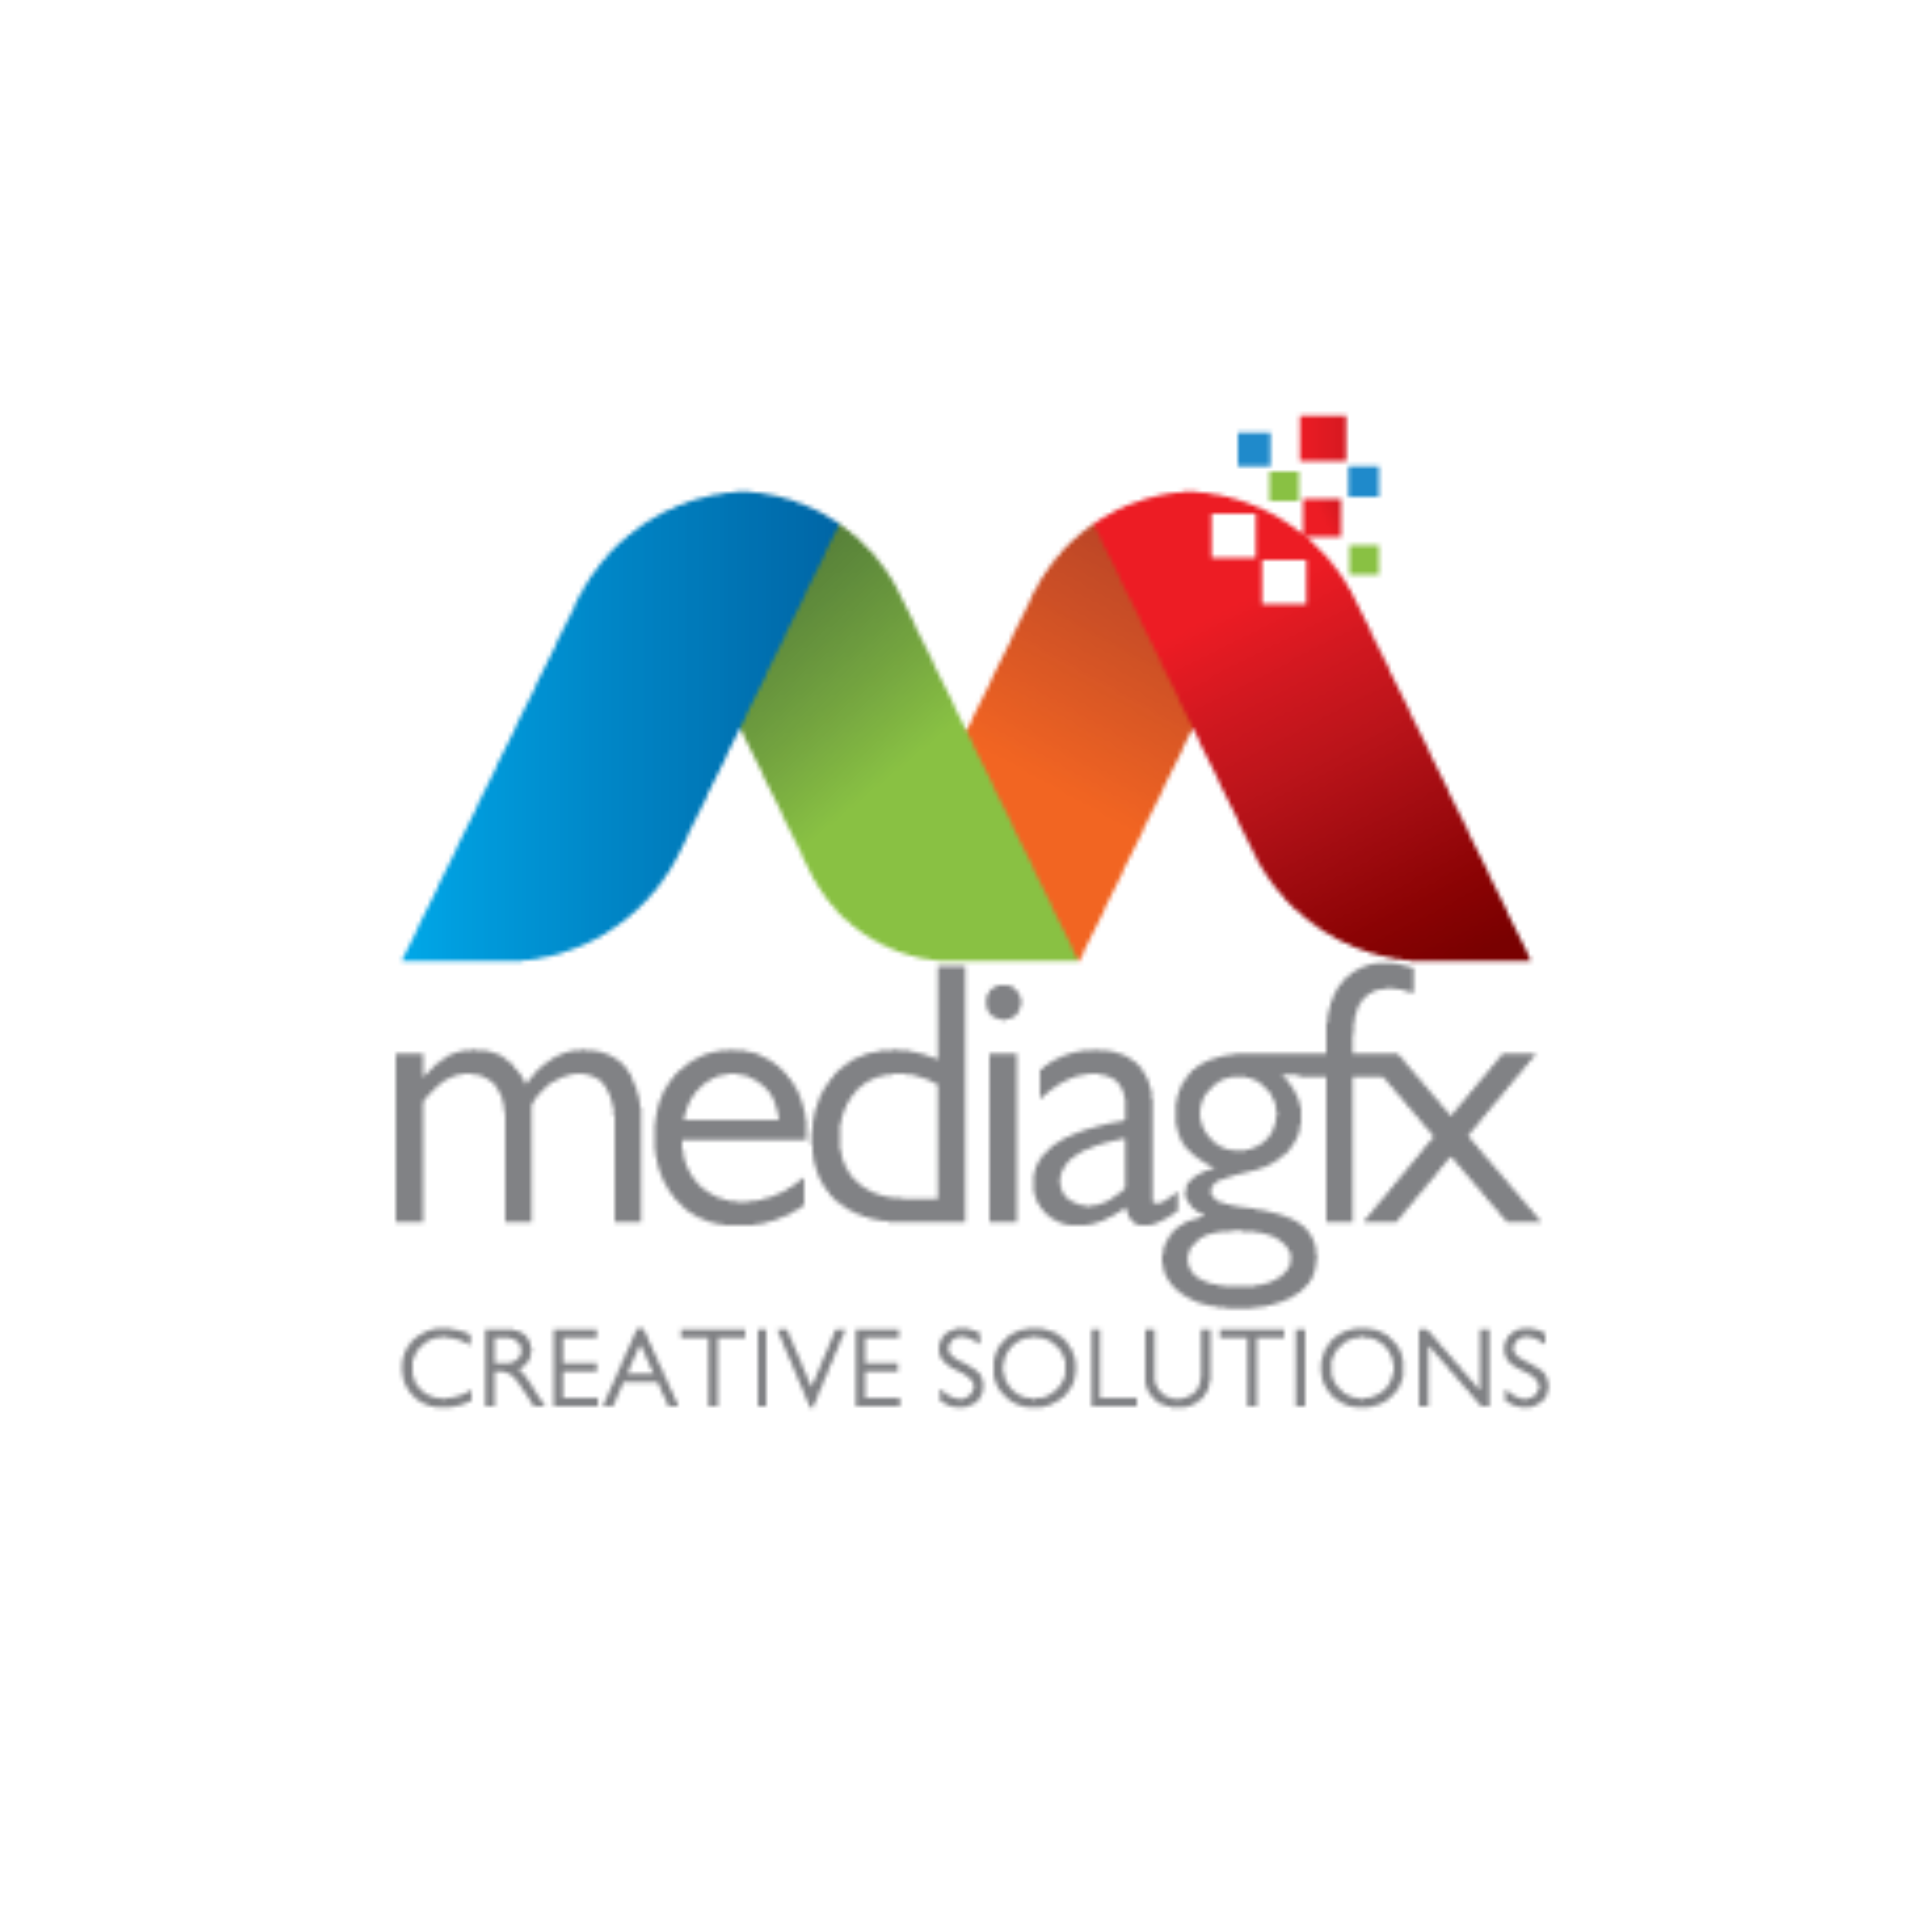 Mediagfx